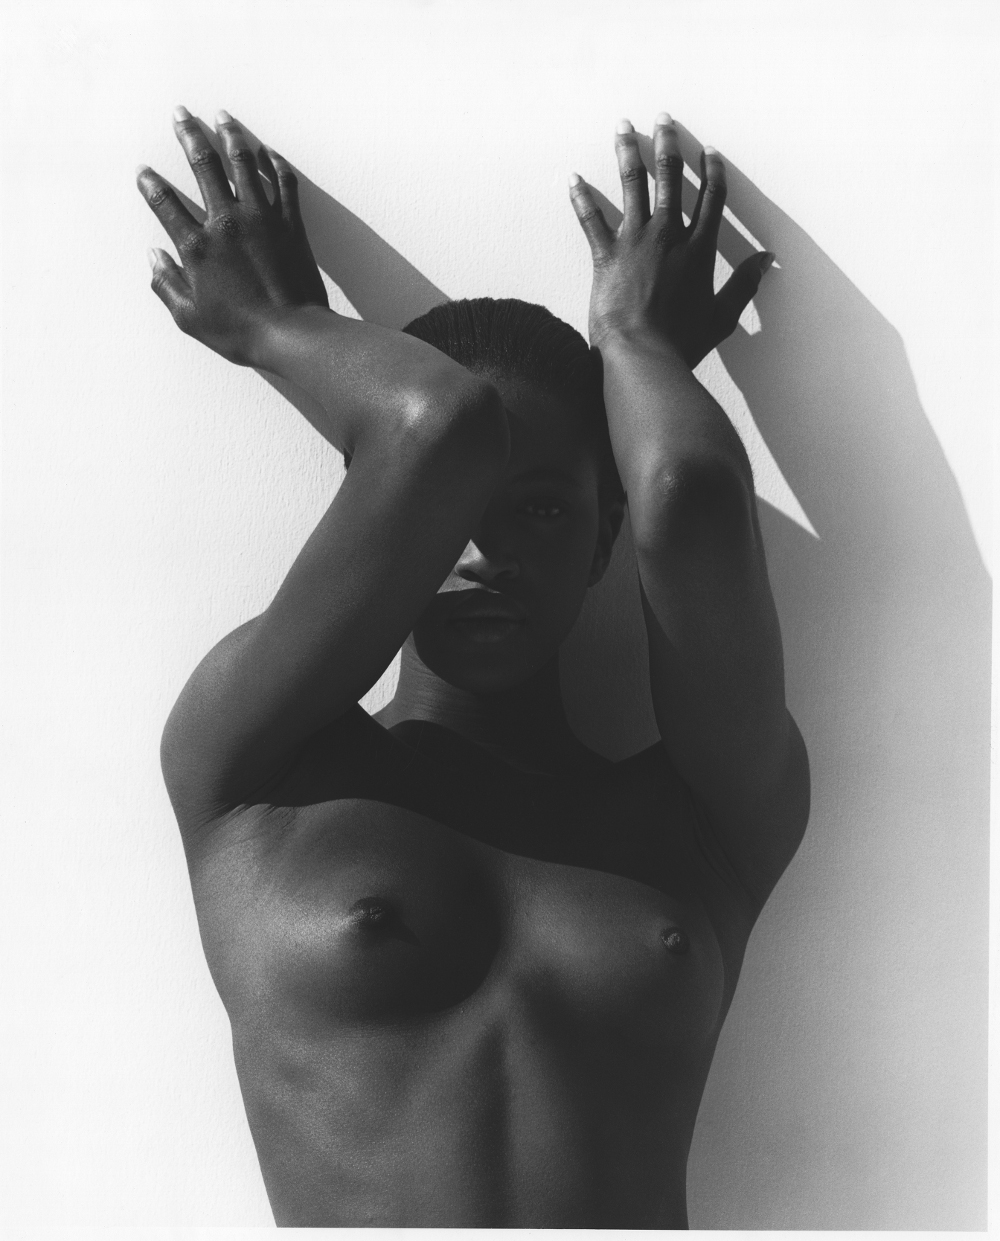 Herb Ritts, Naomi Campbell, 1989. (c) Galerie de l'Instant